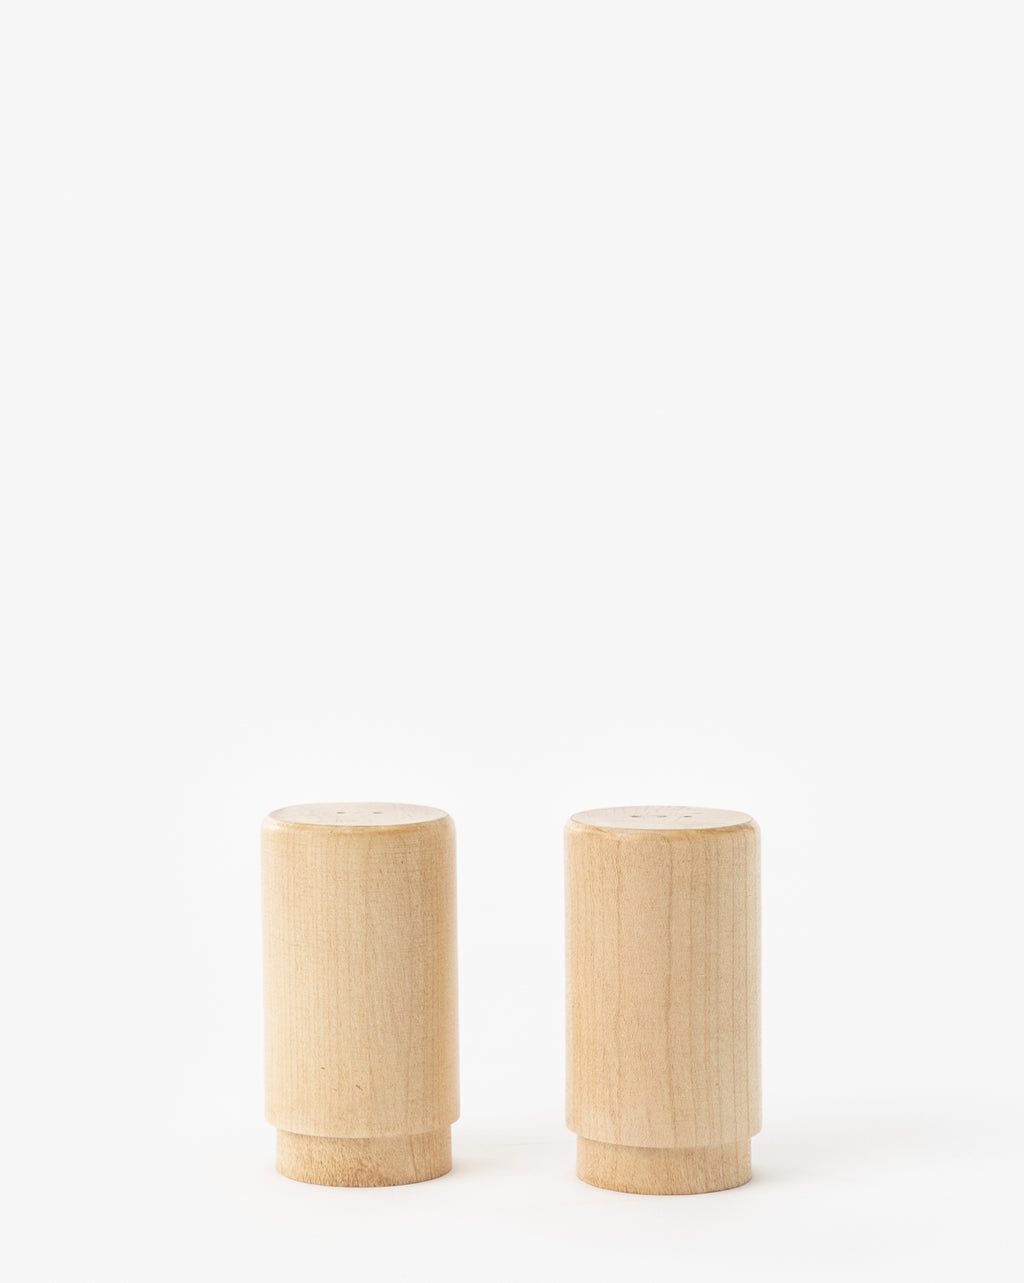 2pc Wood Salt and Pepper Shaker Set - Threshold™ designed with Studio McGee